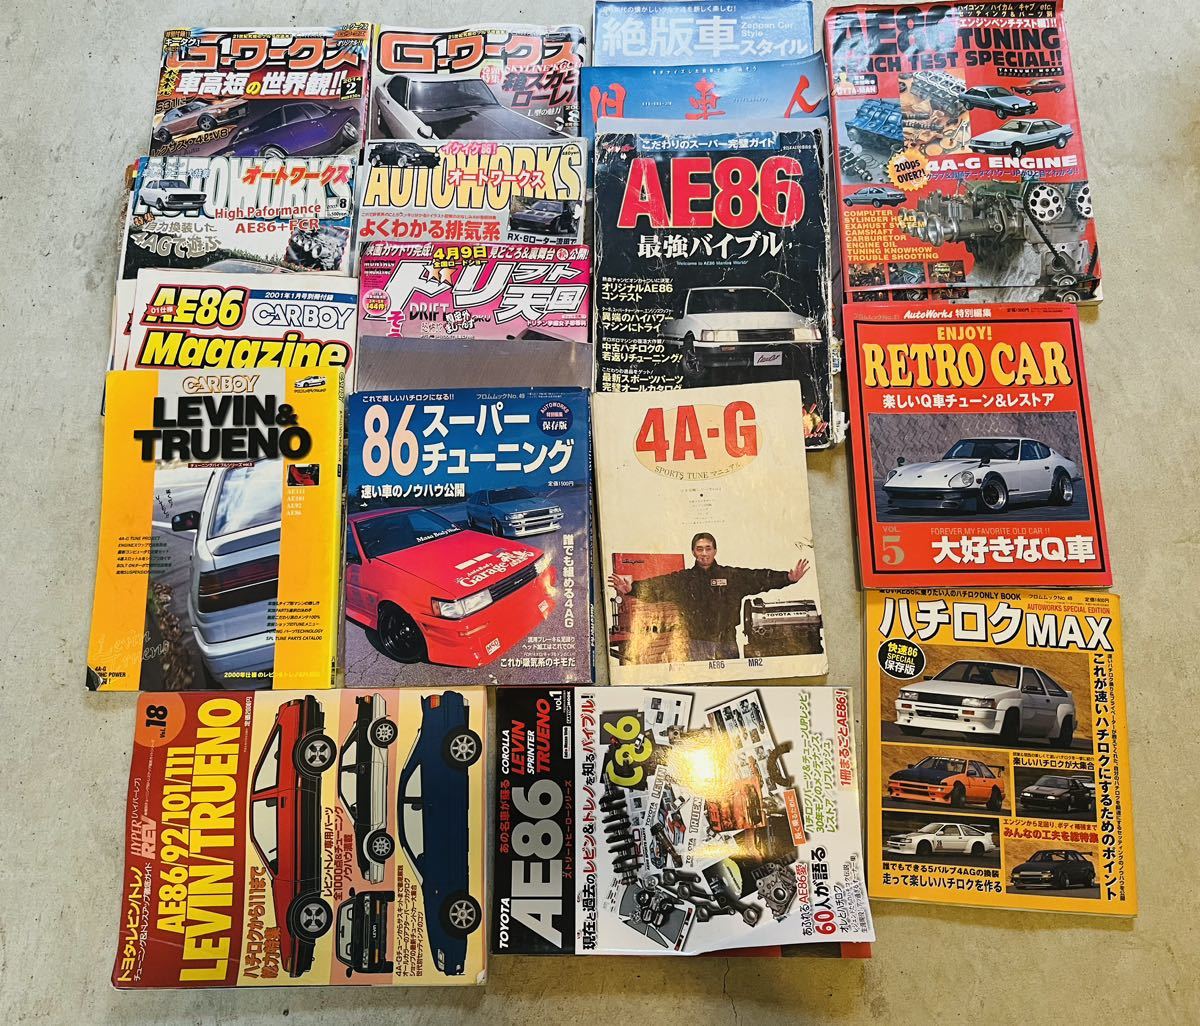 AE86 トレノ レビン古本 雑誌 旧車 車雑誌_画像1